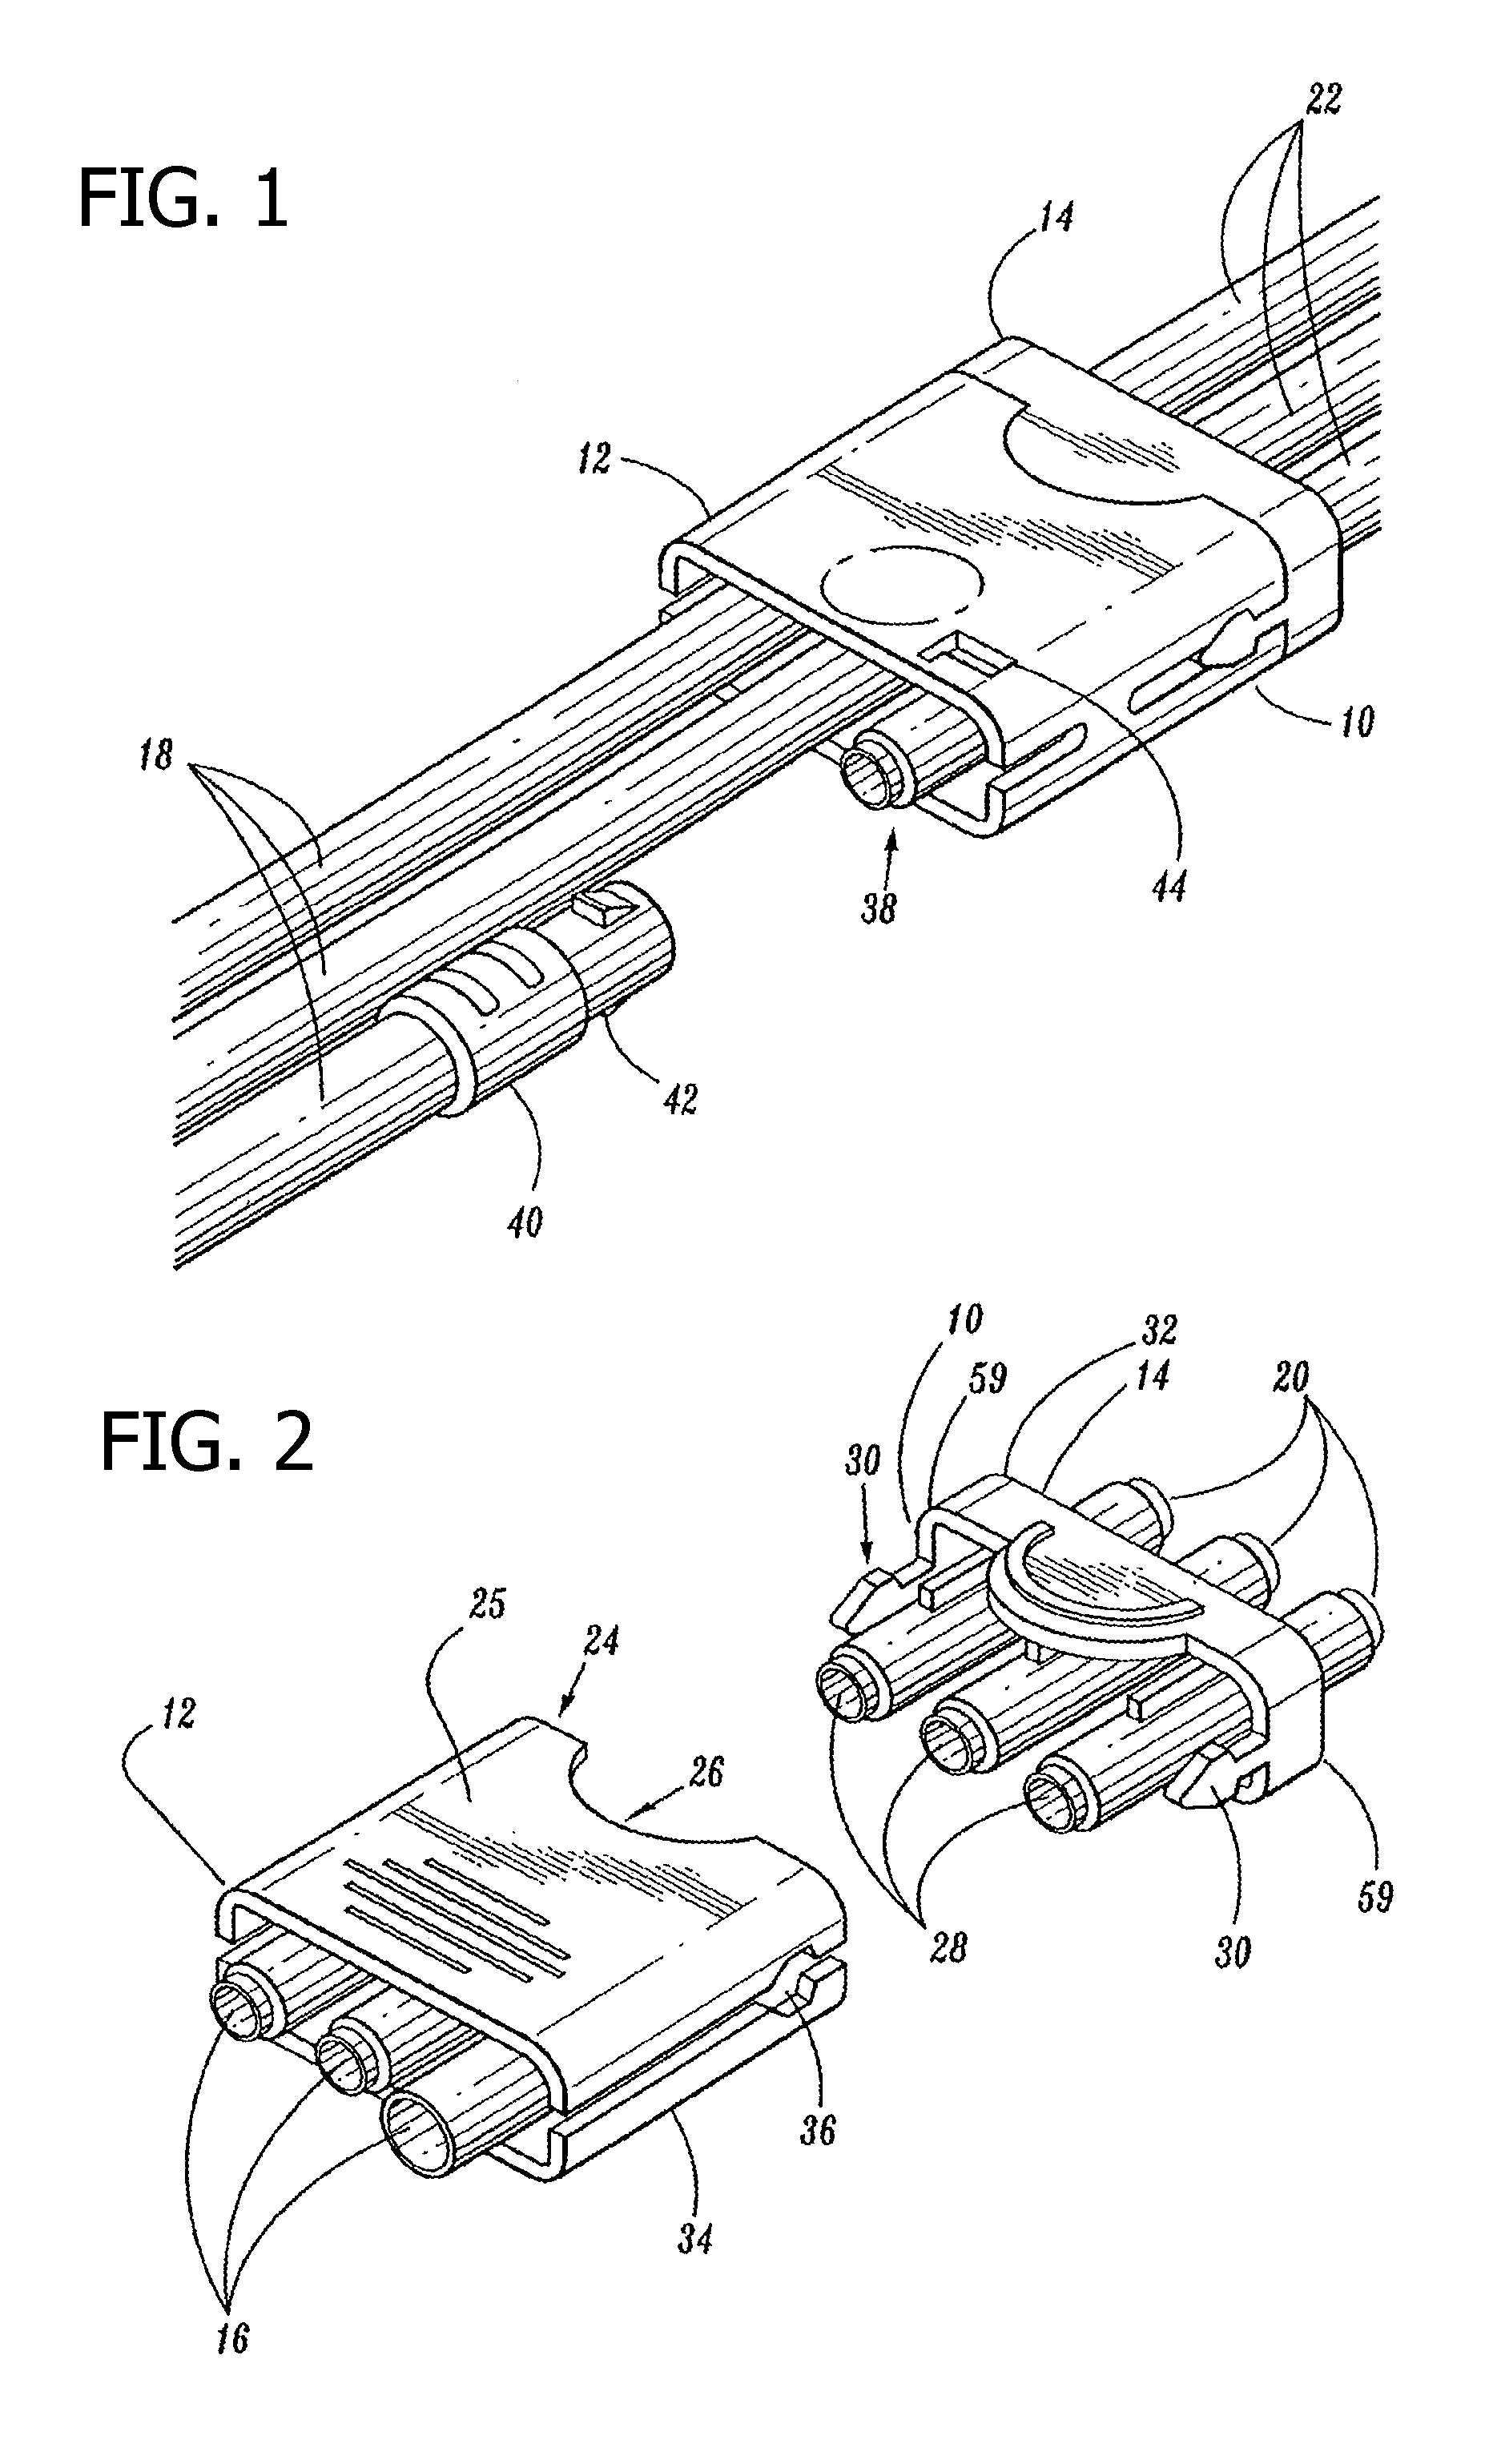 Fluid conduit connector apparatus